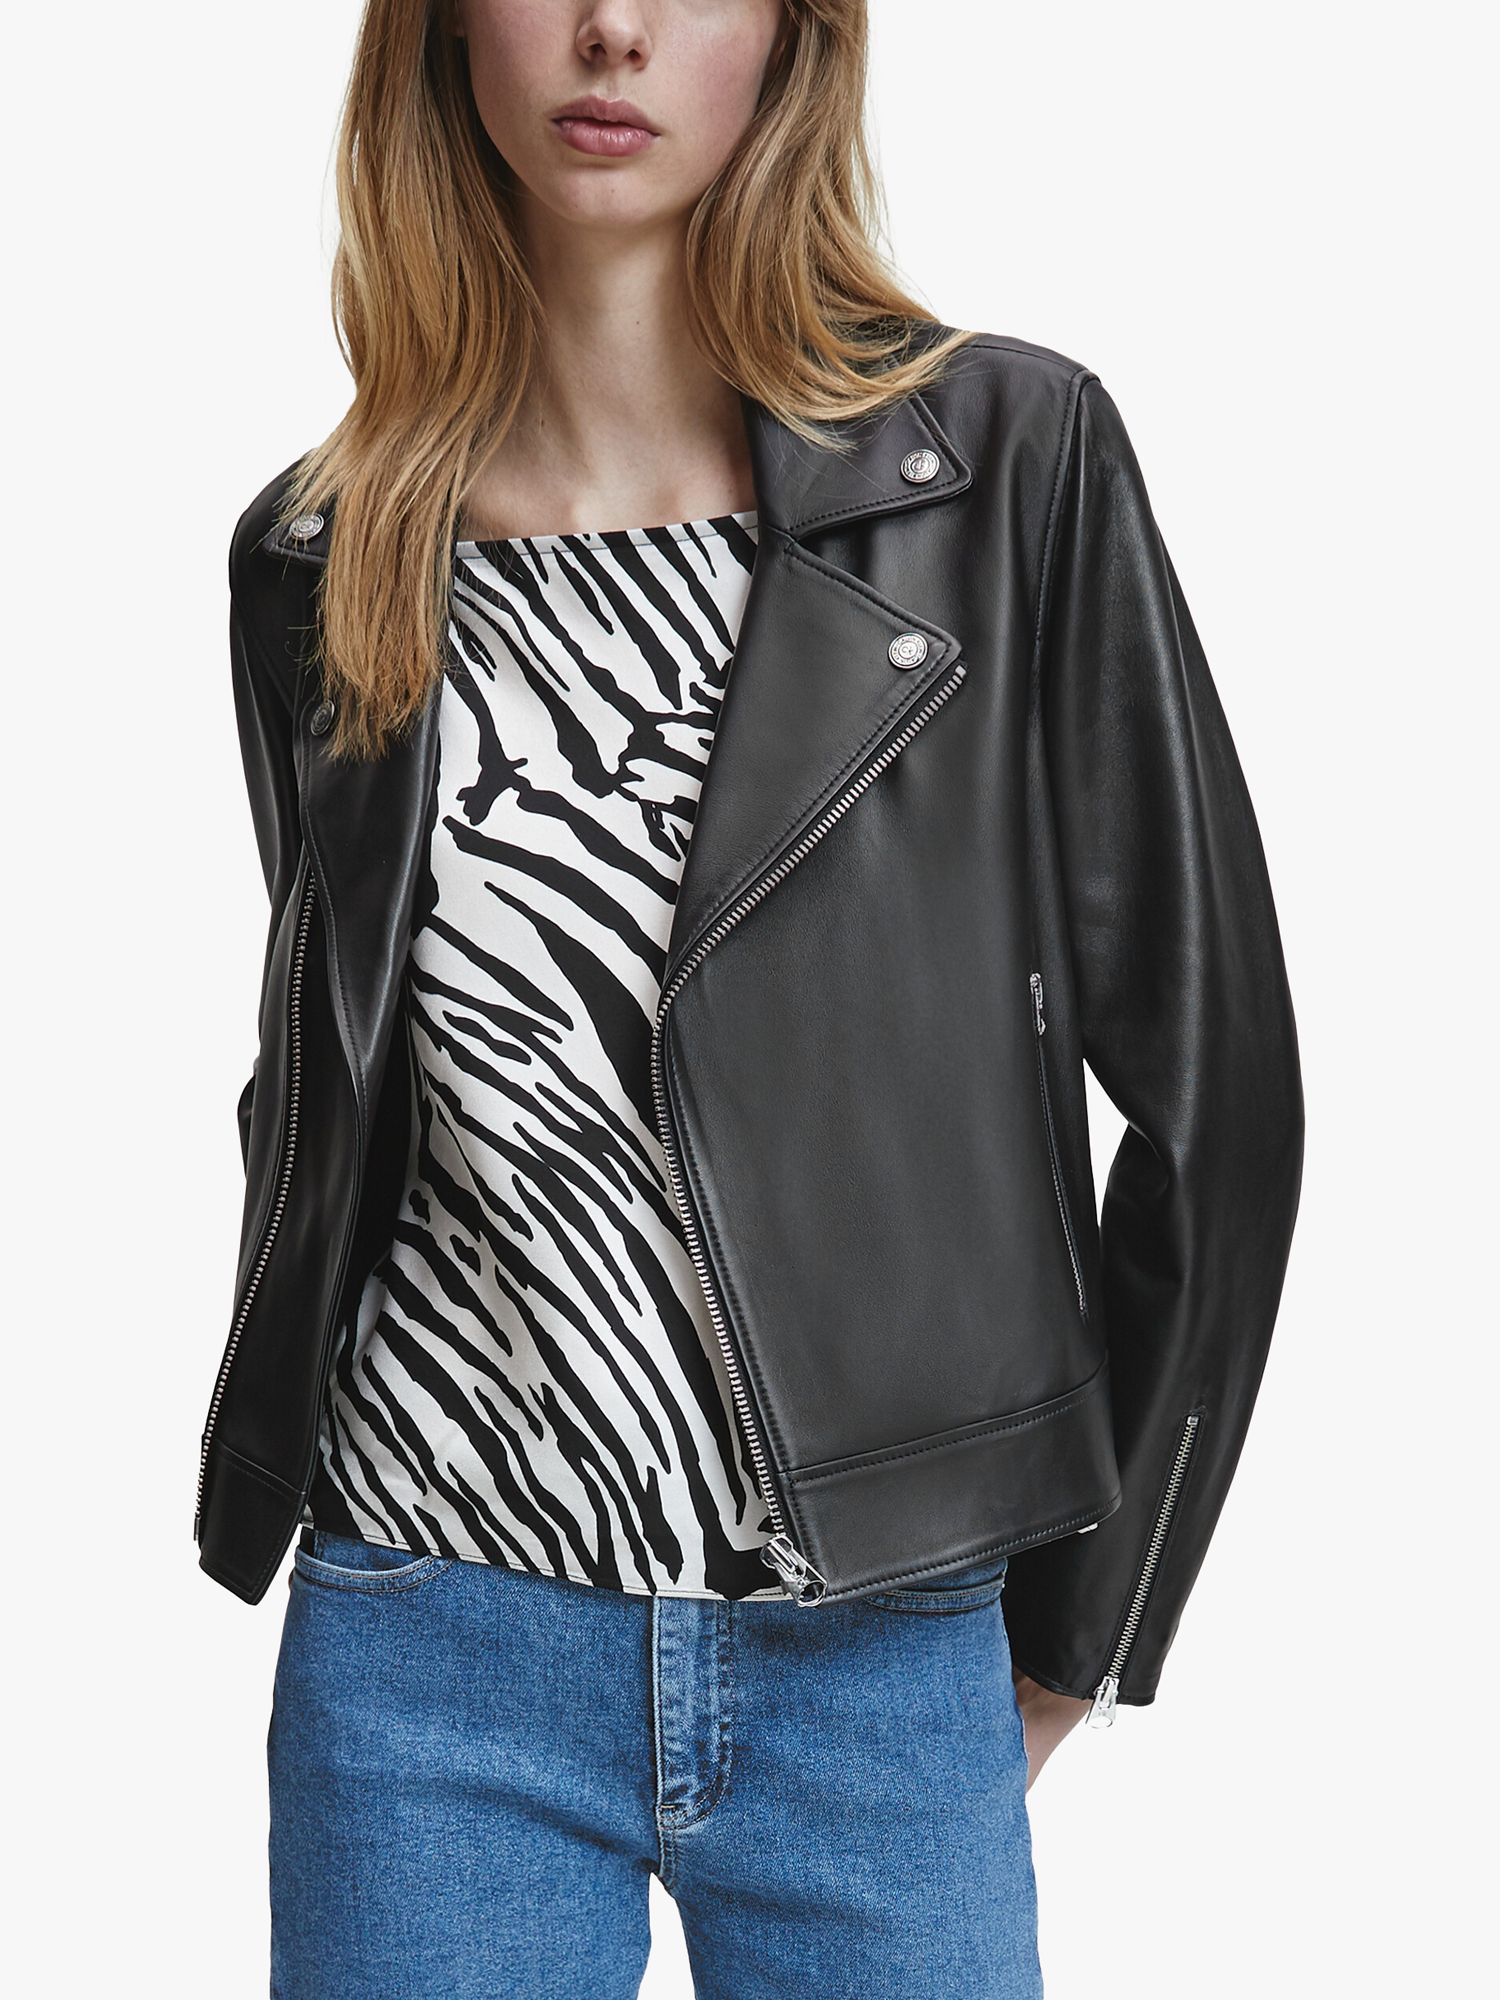 Calvin Klein Leather Jacket, Black